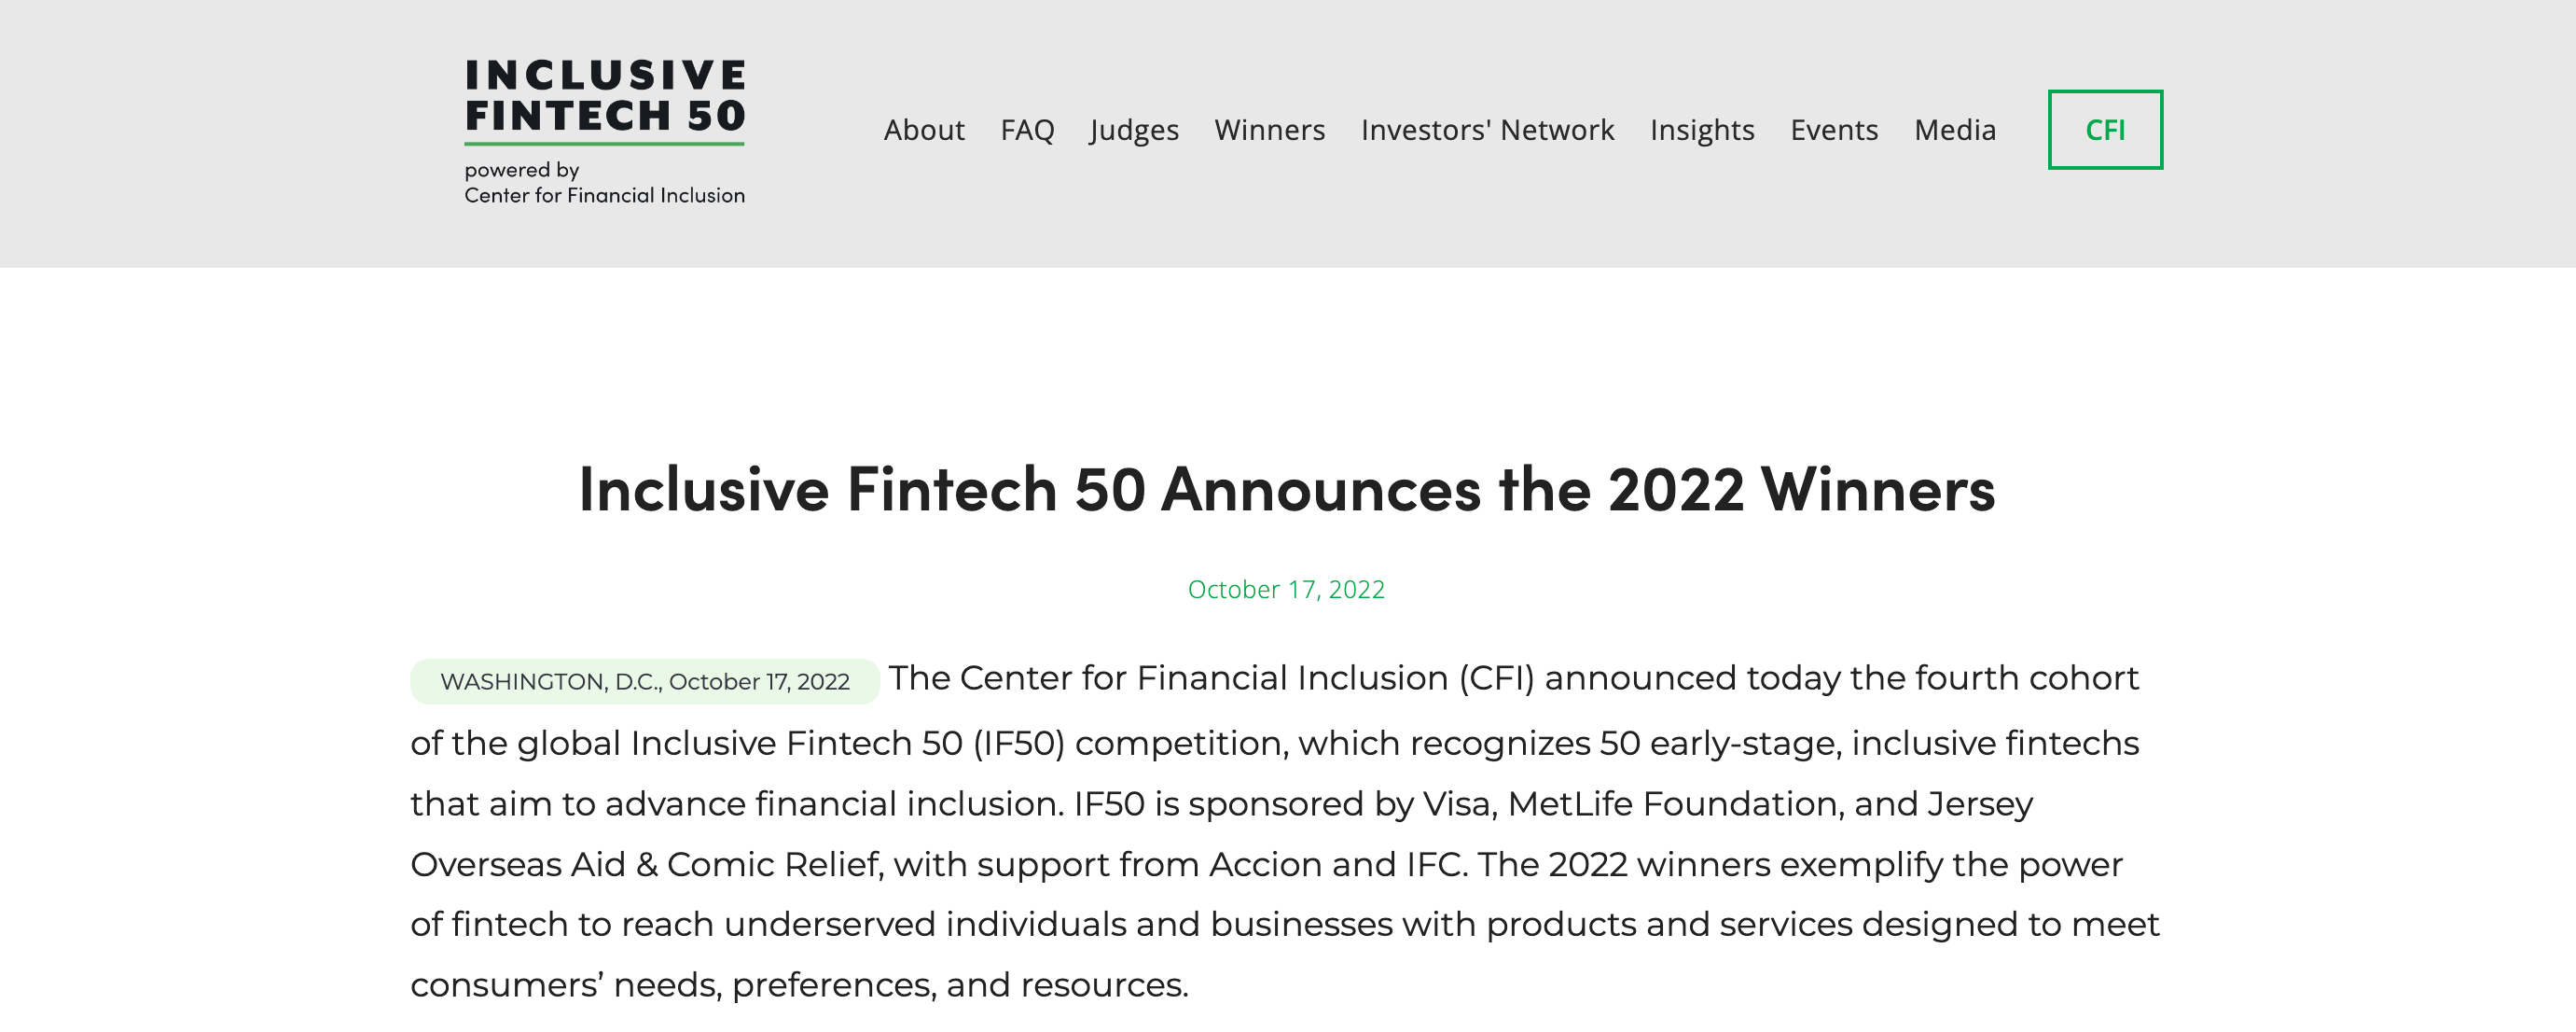 Inclusive Fintech 50 Announces the 2022 Winners